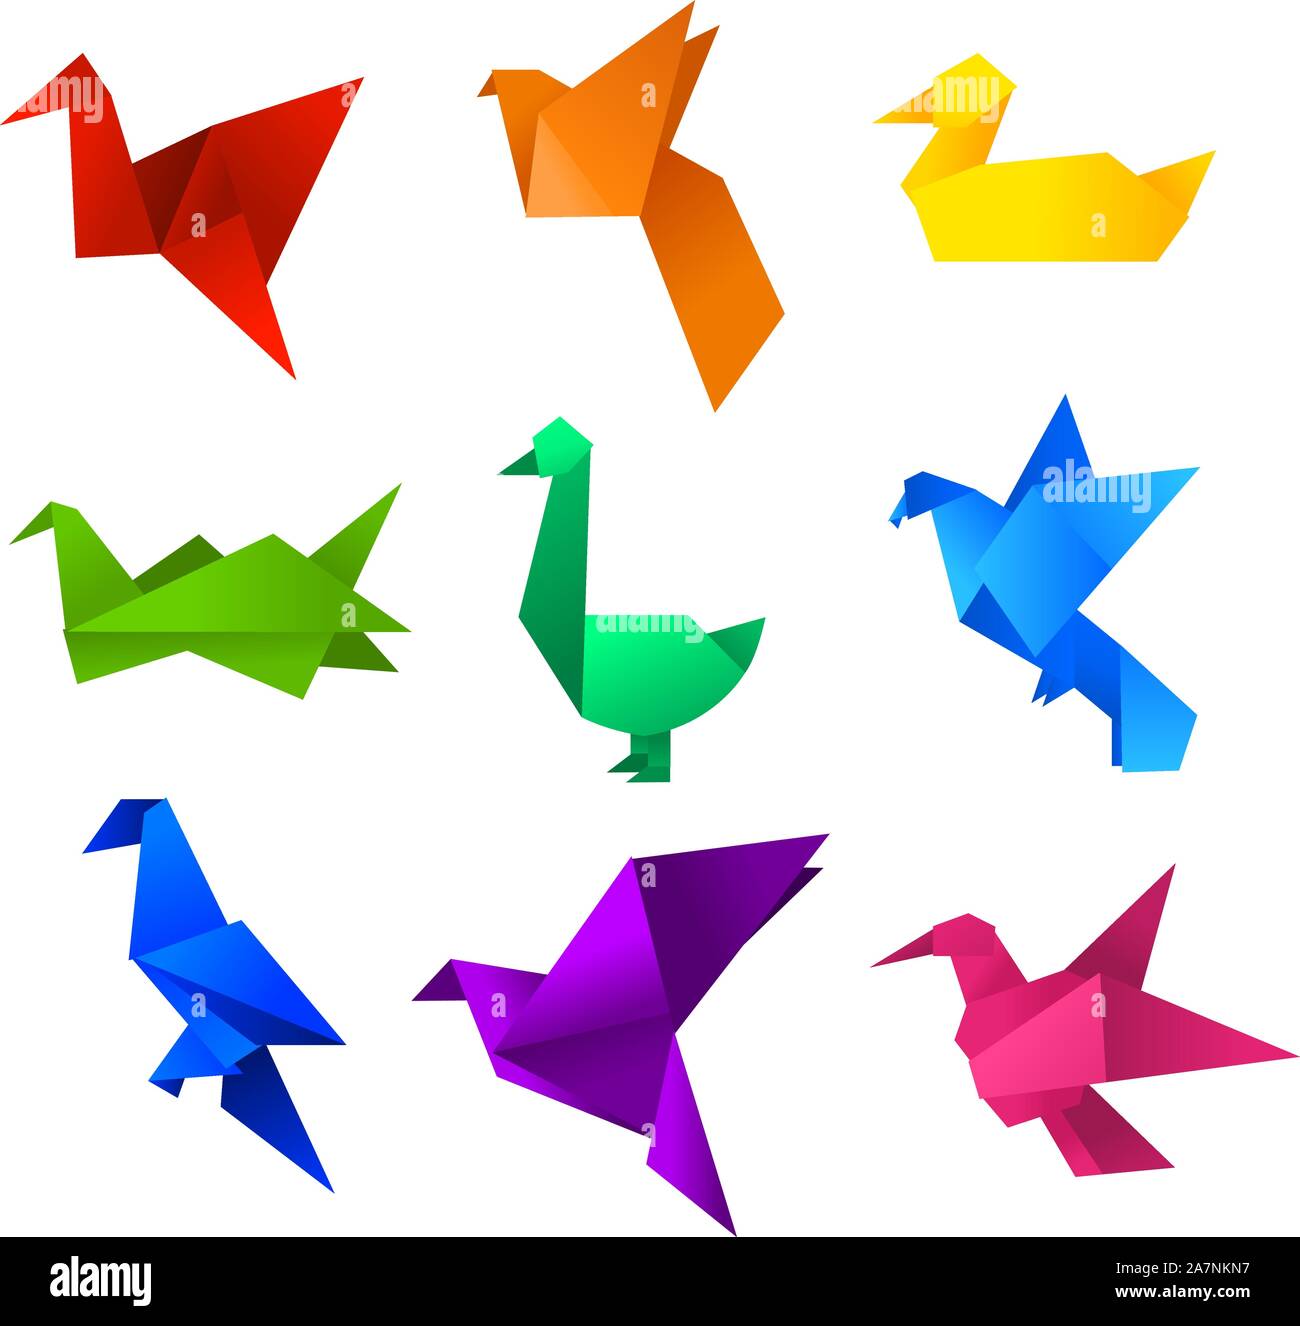 Origami-Vögel-Symbole festgelegt. Mit neun 9 verschiedene Origami Vögel in verschiedenen Farben wie: rot, orange, gelb, grün, Türkis, blau, blau, Vio Stock Vektor